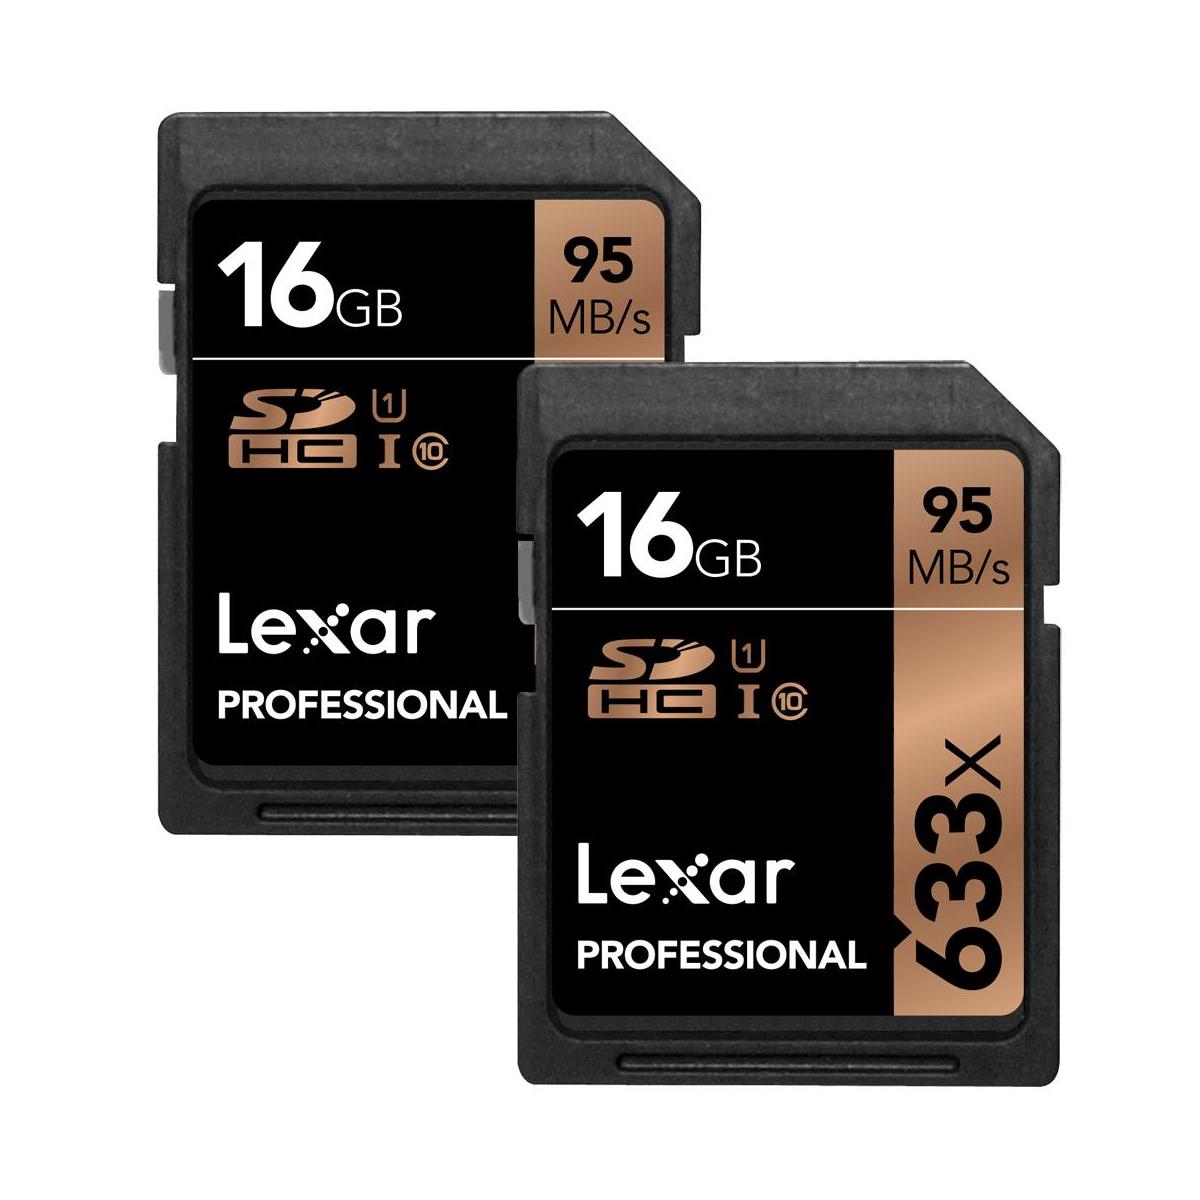 lexar uhs i memory card image 